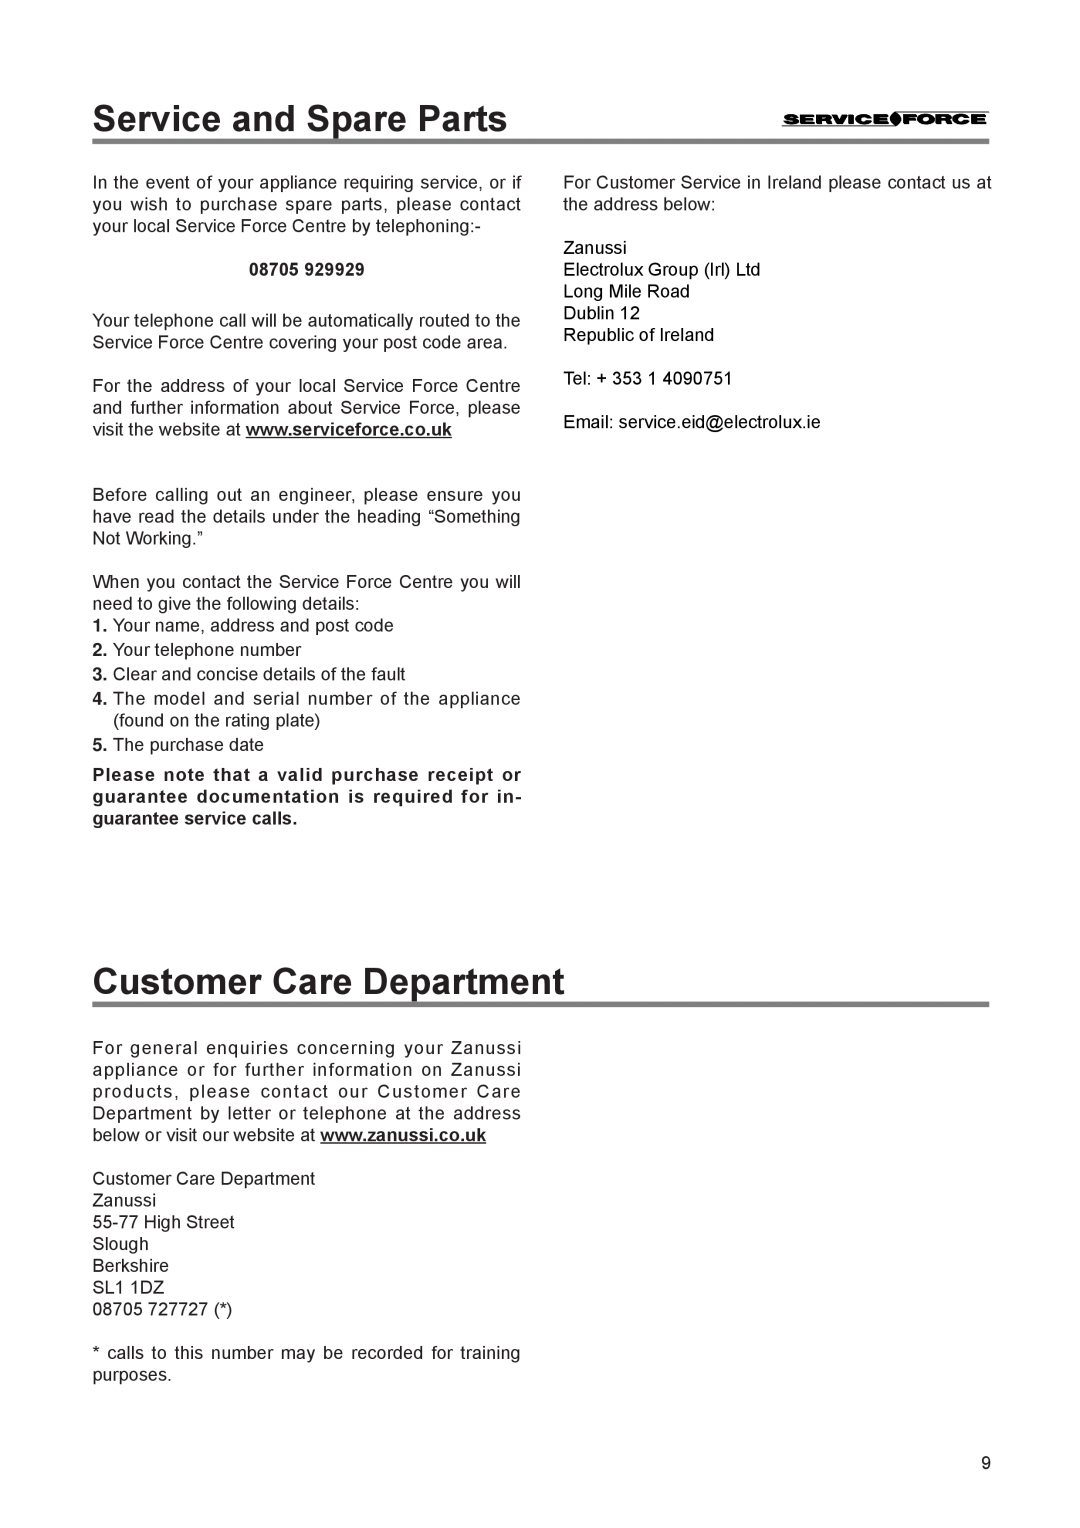 Zanussi ZI 9225, ZI 9155 manual Service and Spare Parts, Customer Care Department, 08705 